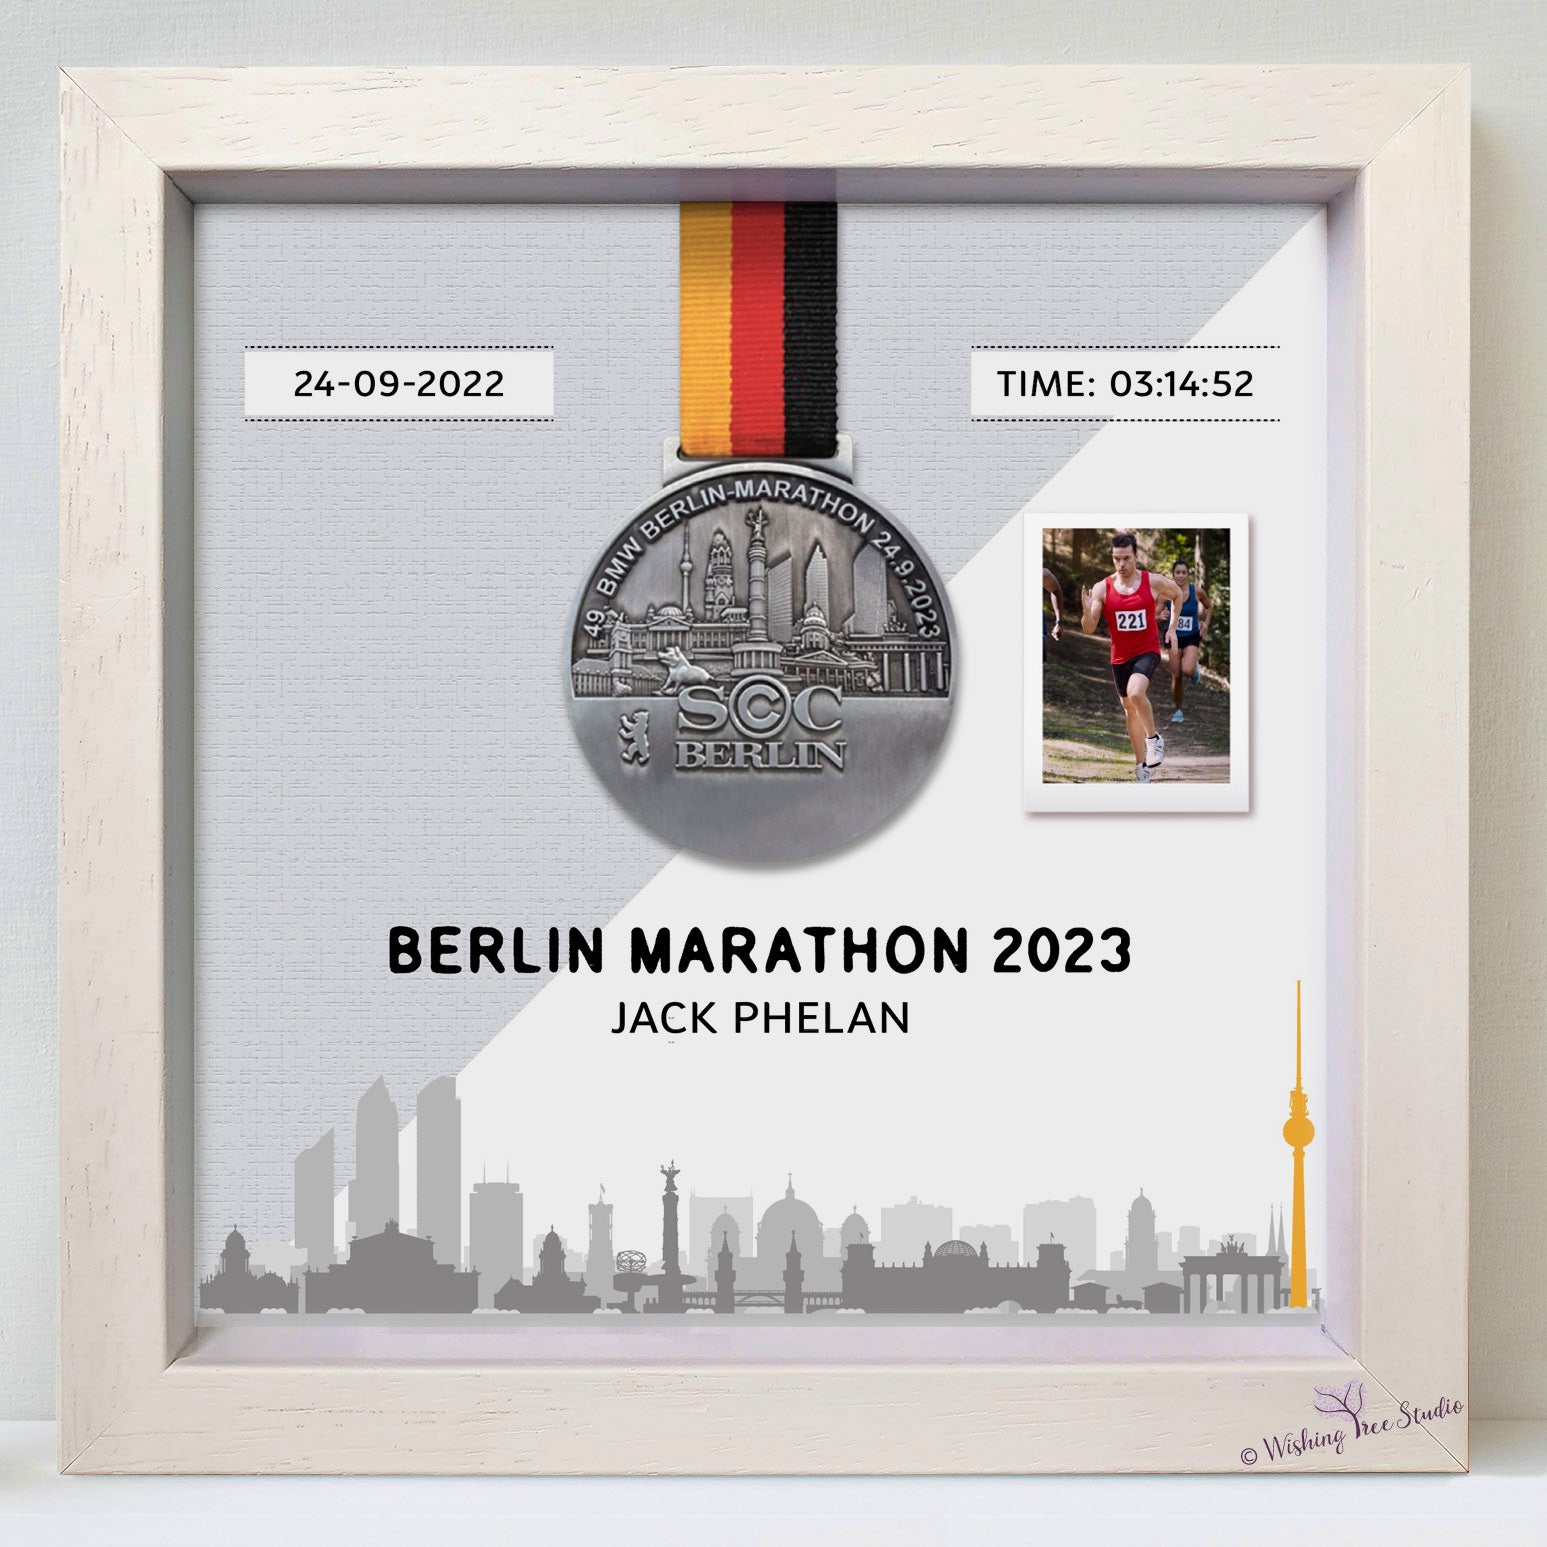 Berlin Marathon Medal display frame with photo